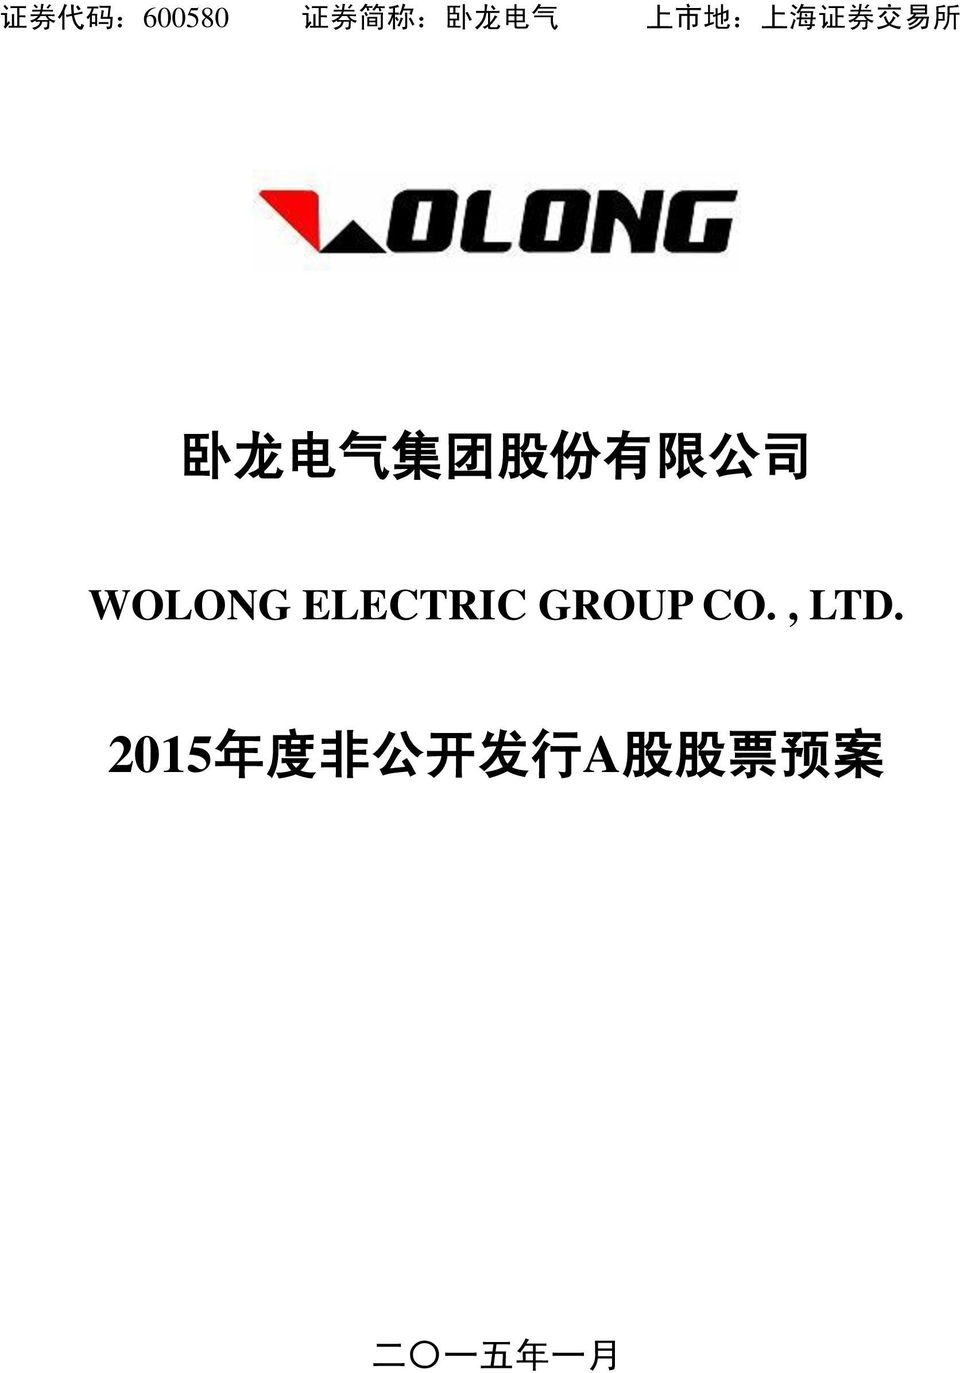 公 司 WOLONG ELECTRIC GROUP CO., LTD.